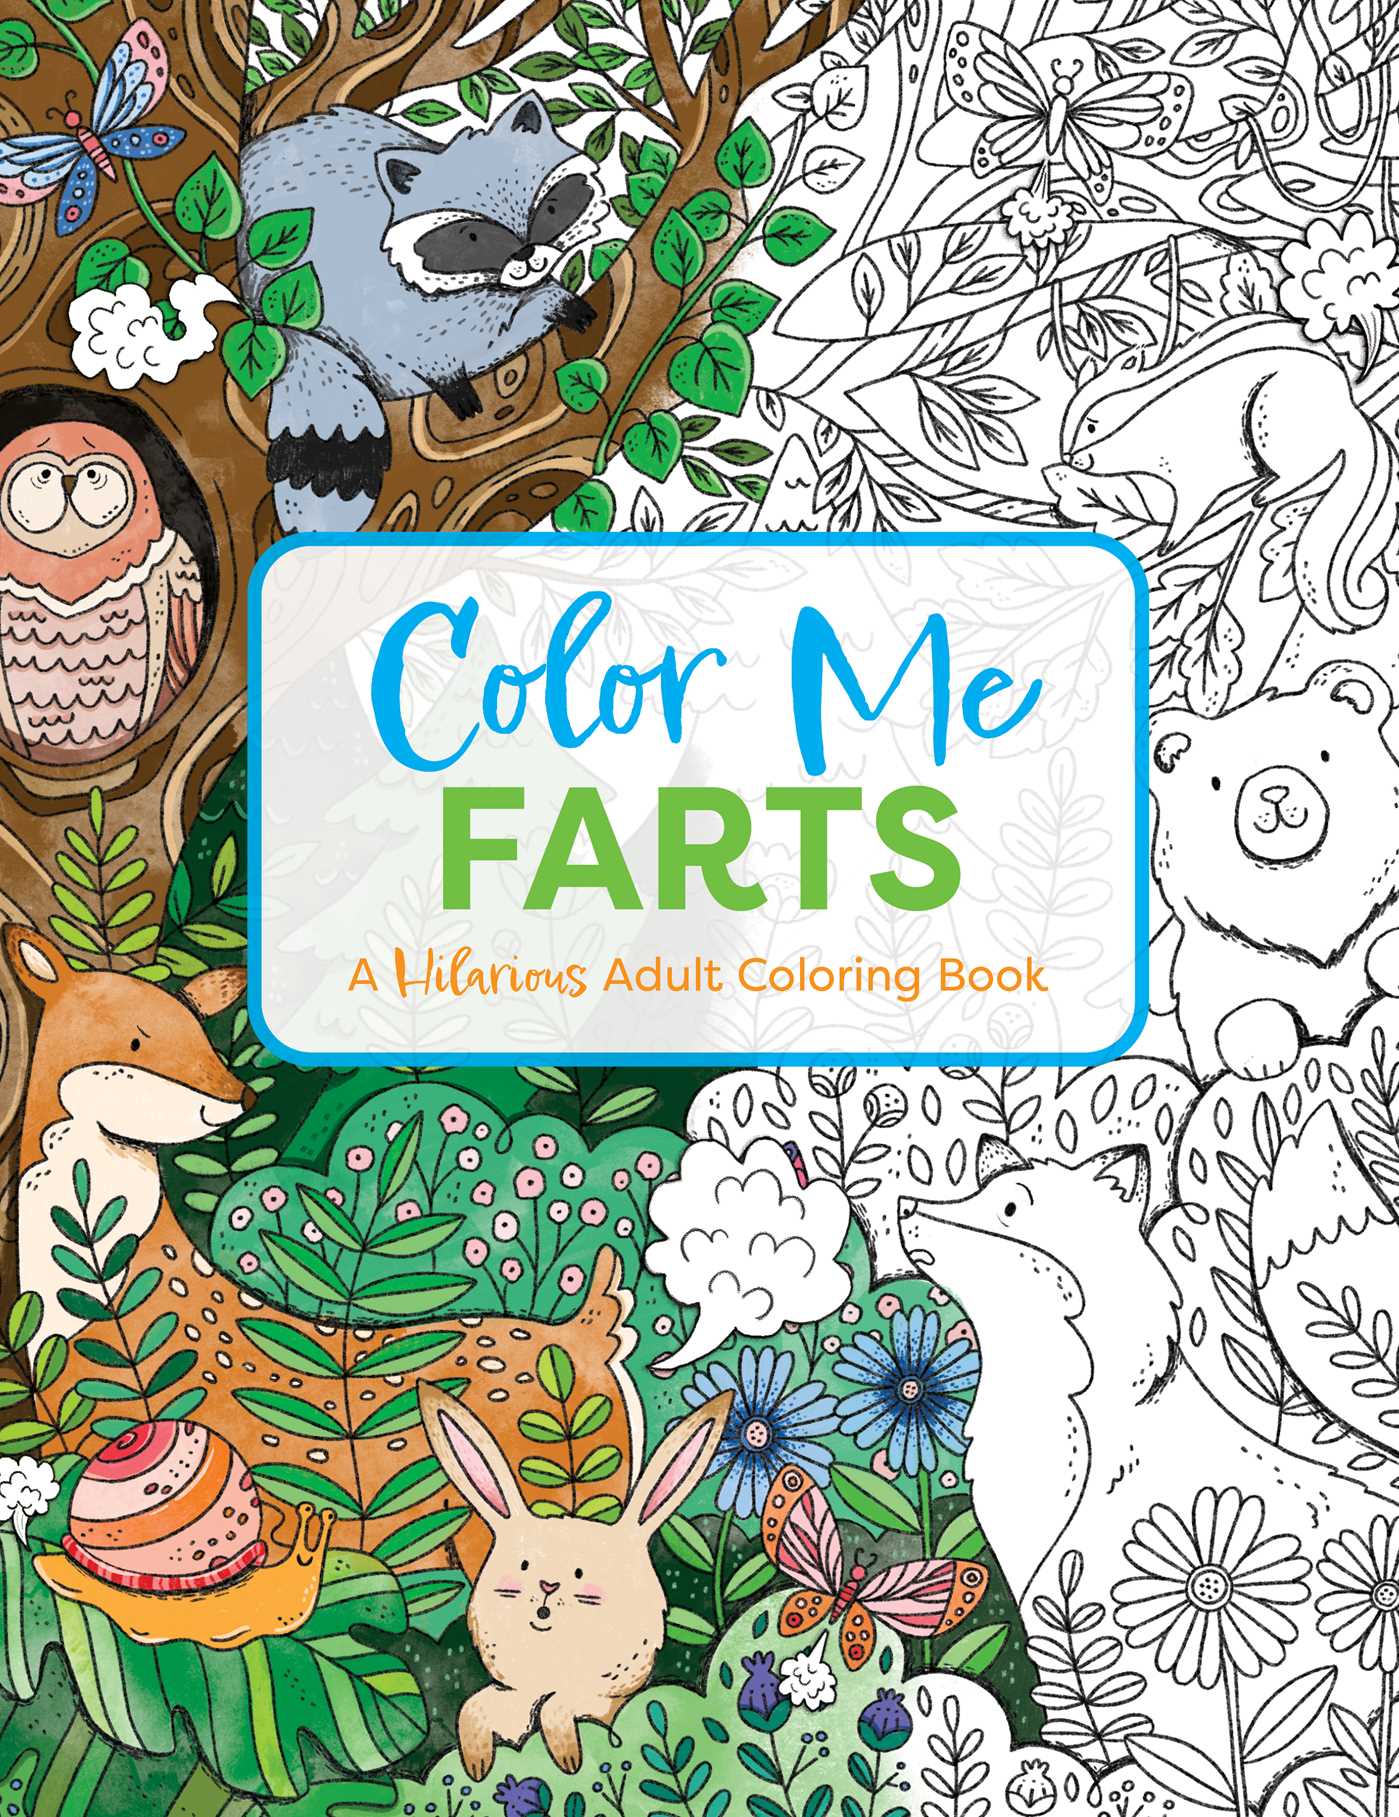 Color Me Farts: A Hilarious Adult Coloring Book [Book]